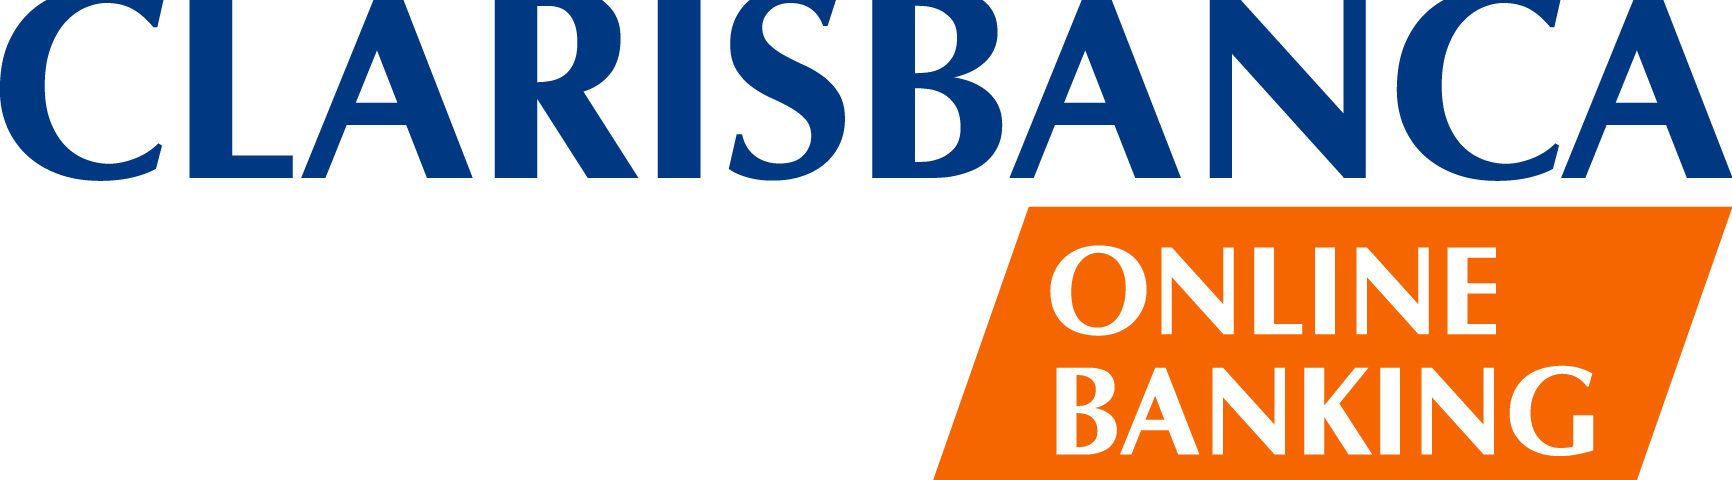 logo_clarisbancaonlinebanking